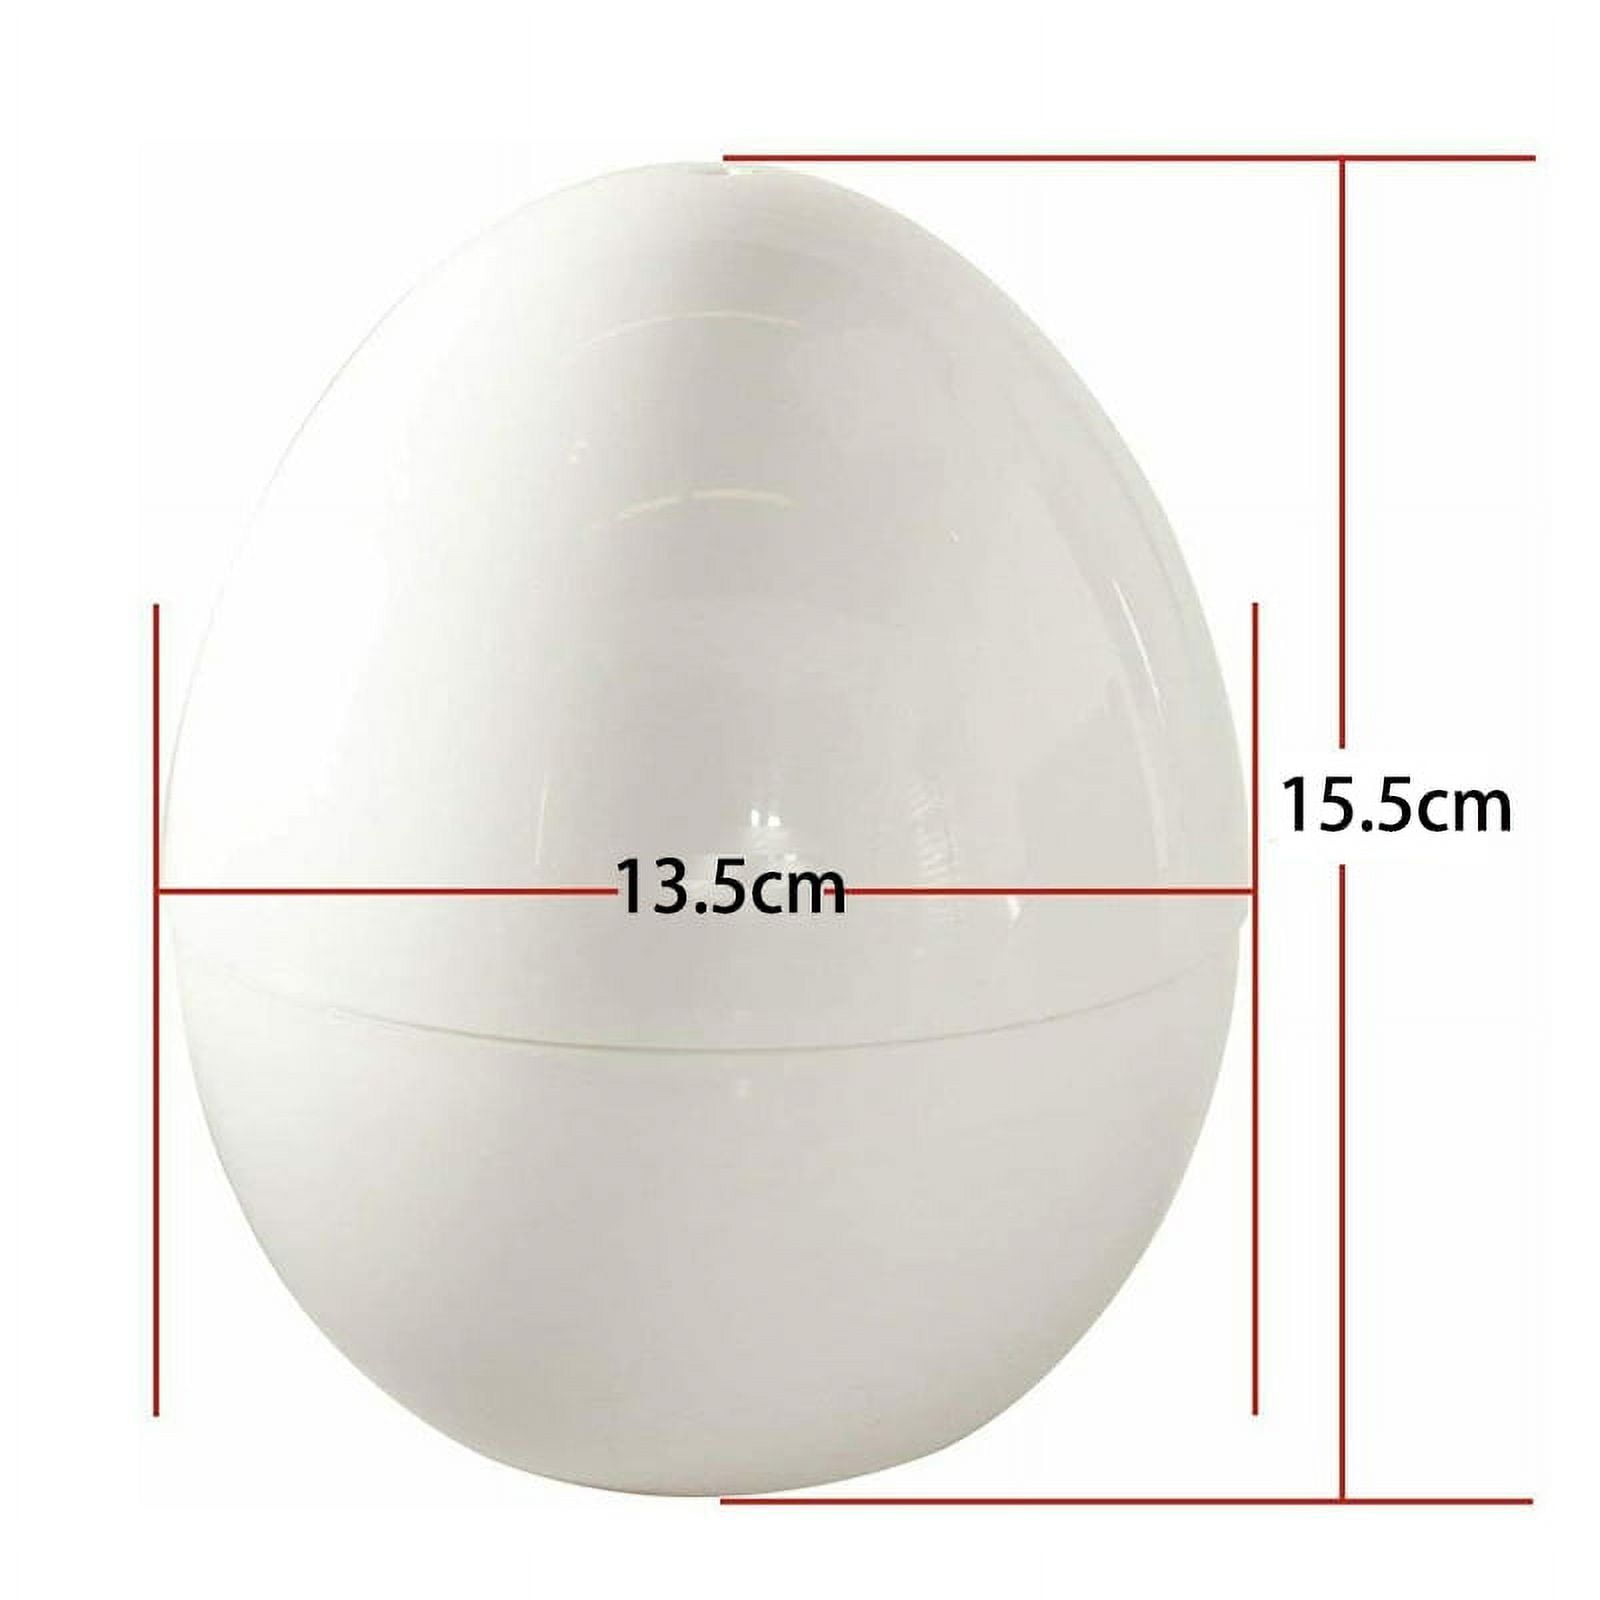 Microwave Egg Boiler Cooker Egg Pod Detaches the Shell Steamer Kitchen Cook  Tool - Plugsus Home Furniture